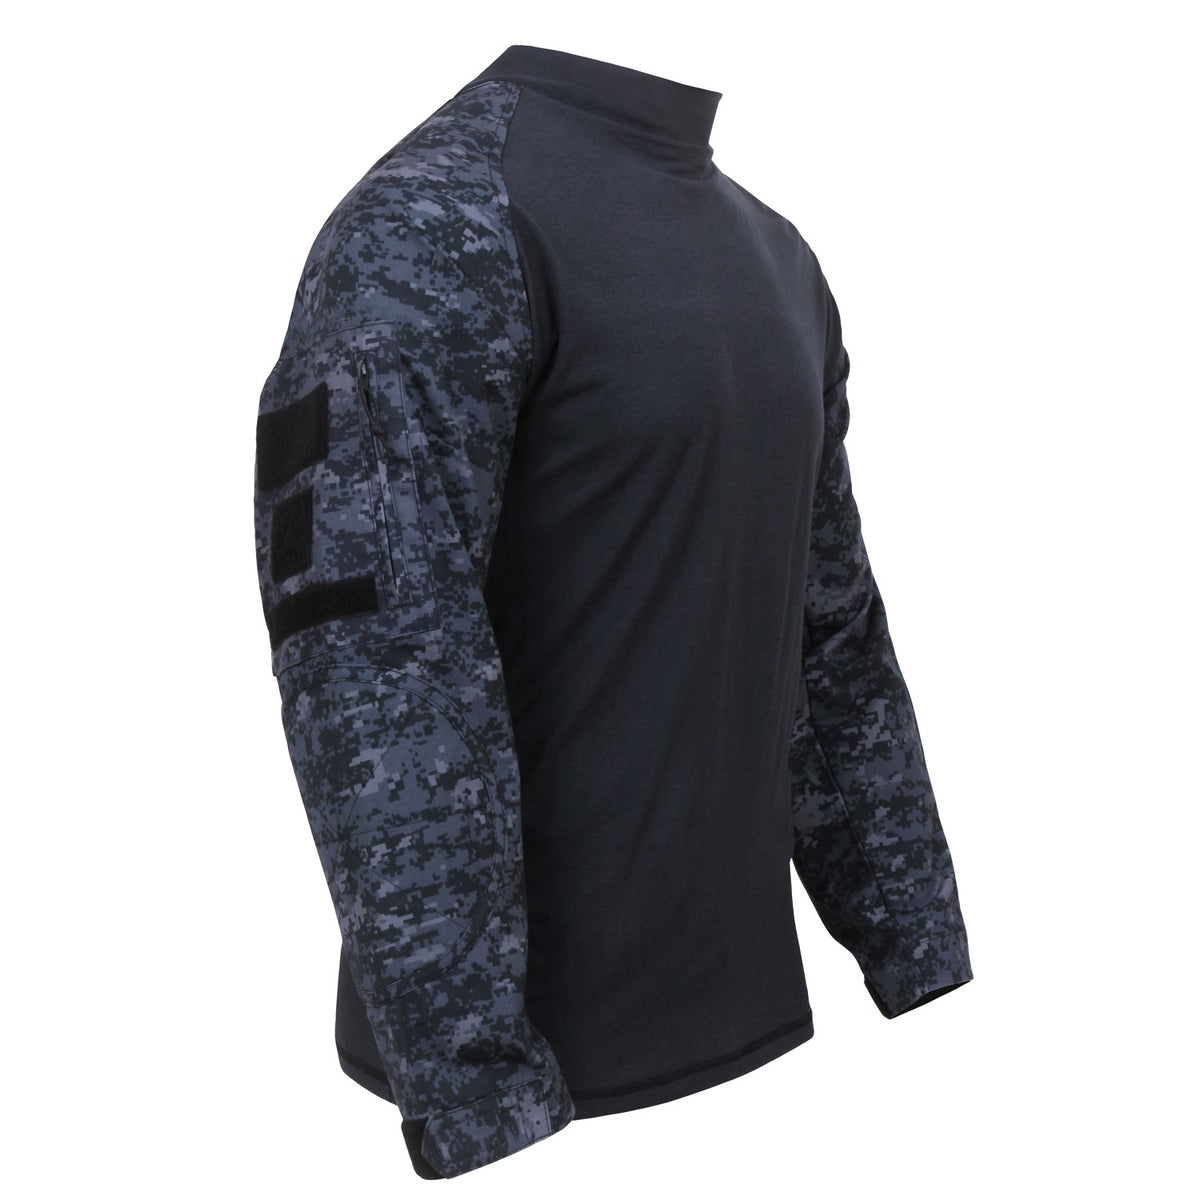 Rothco Military NYCO FR Fire Retardant Combat Shirt Midnight Digital Camo